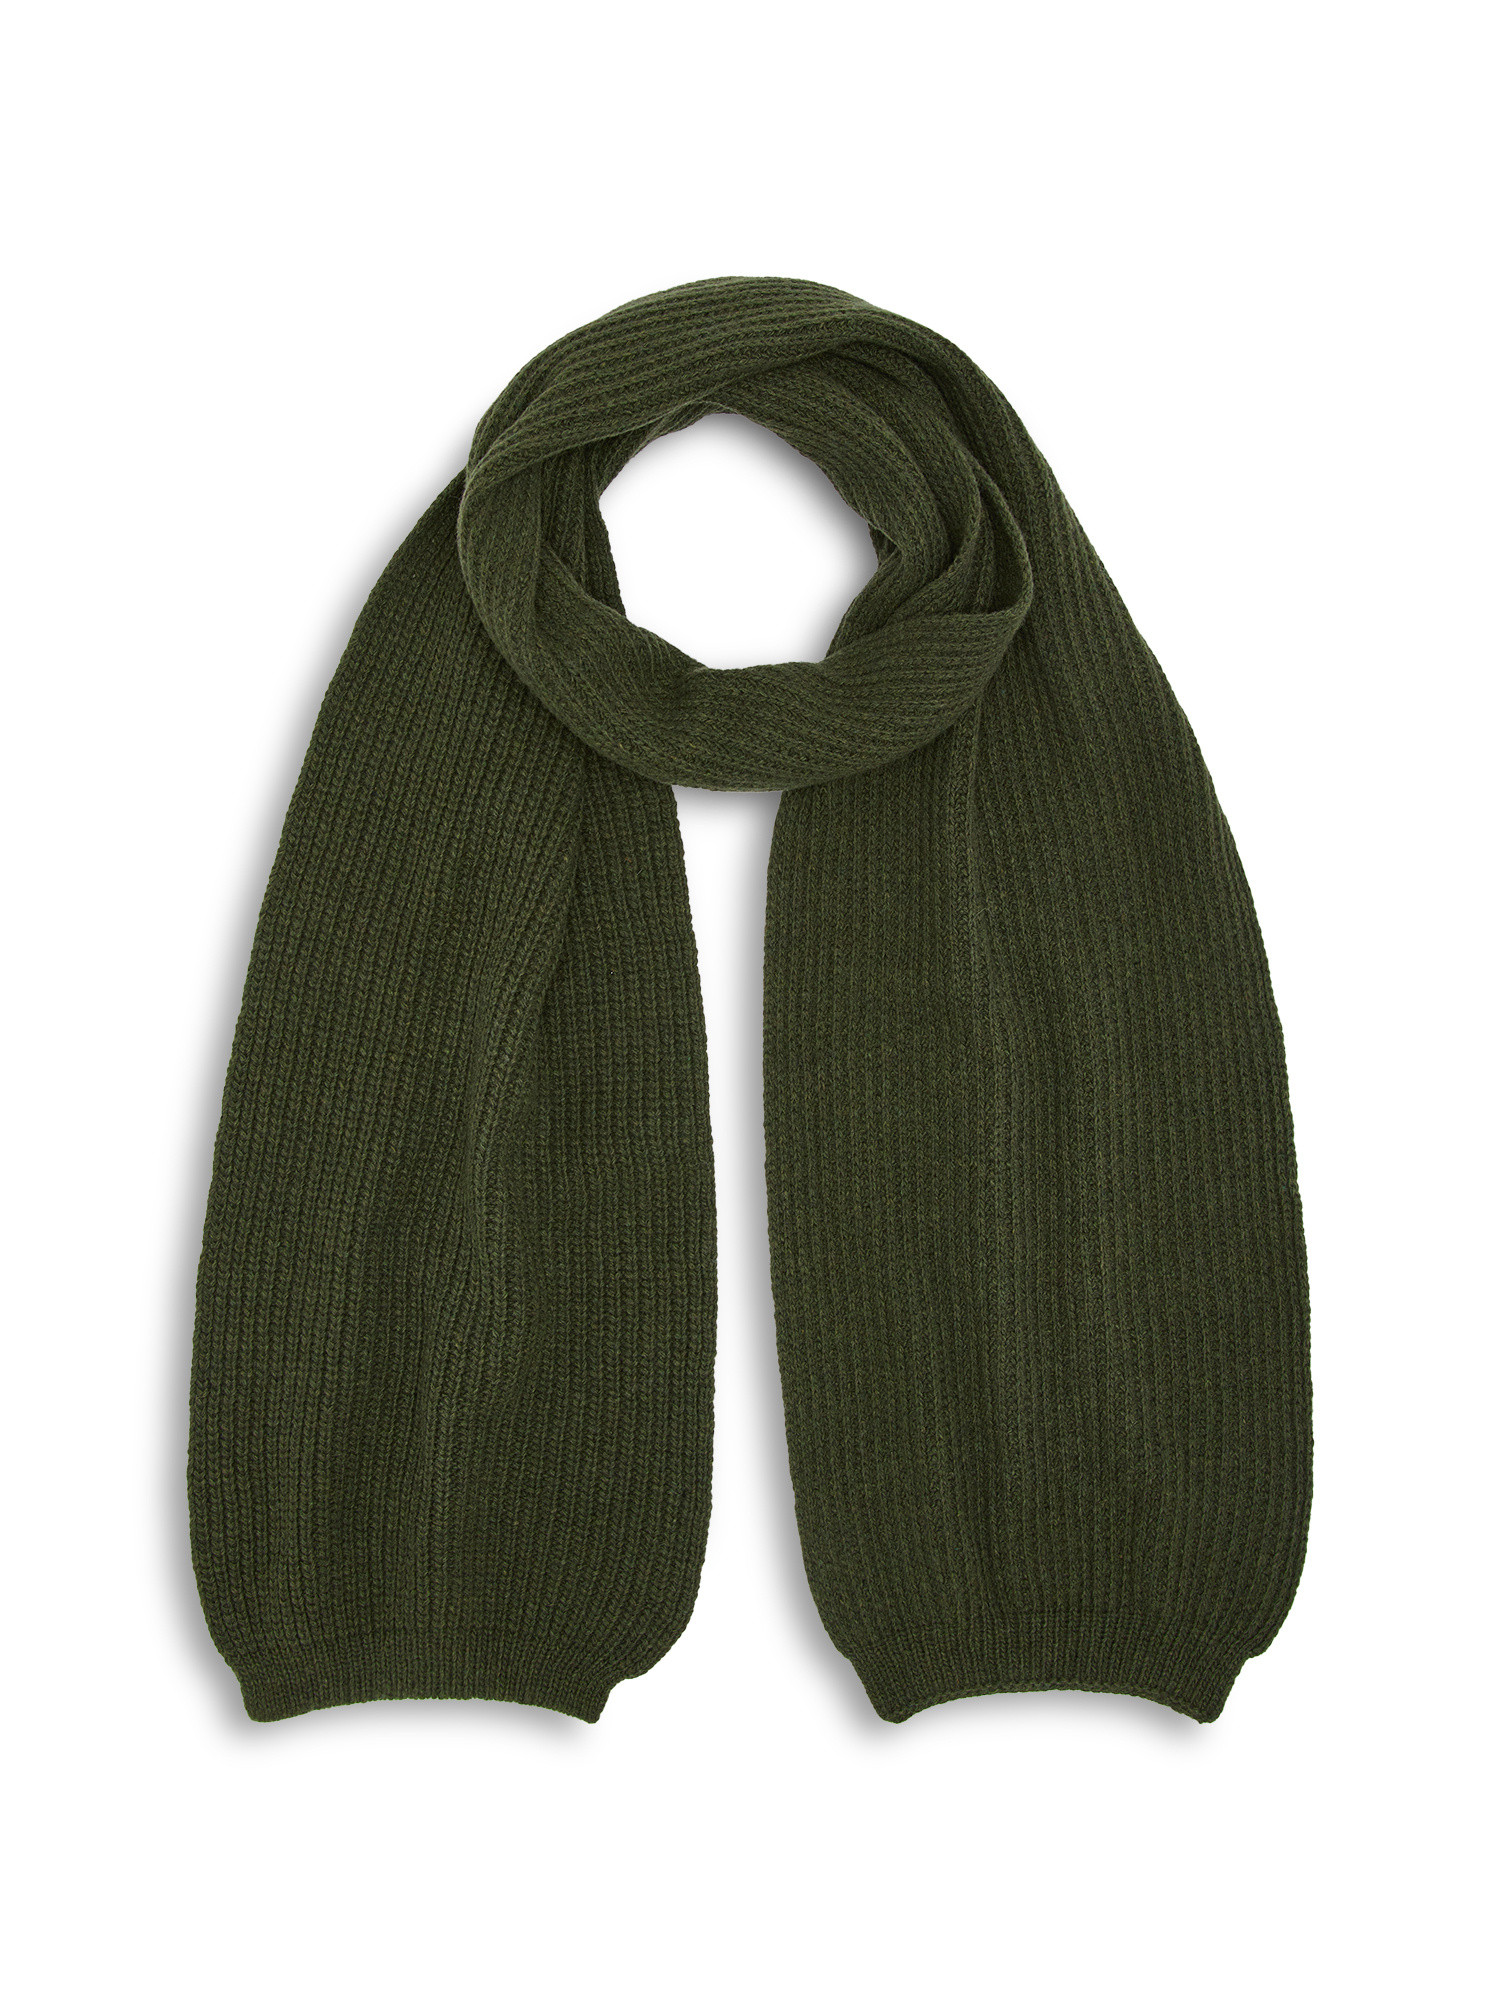 Luca D'Altieri - English rib stitch scarf, Green, large image number 0